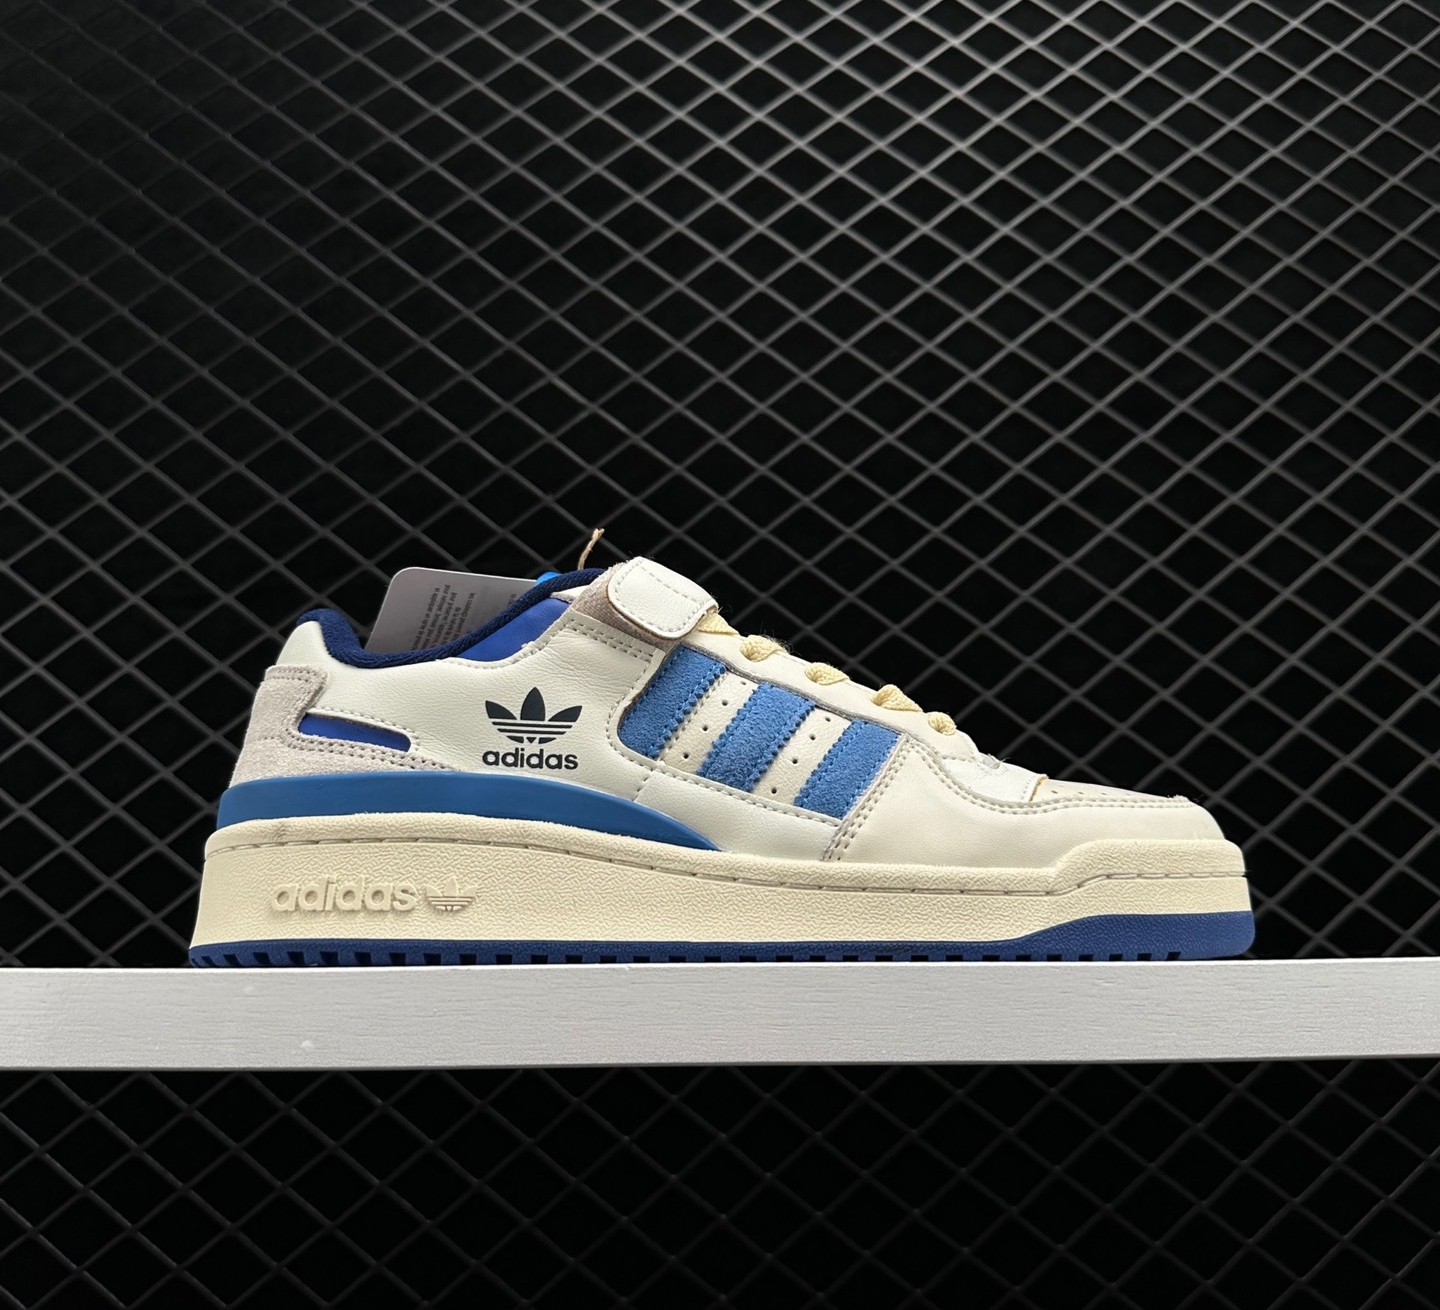 Adidas Forum 84 Low OG Bright Blue - Premium Sneakers for Men